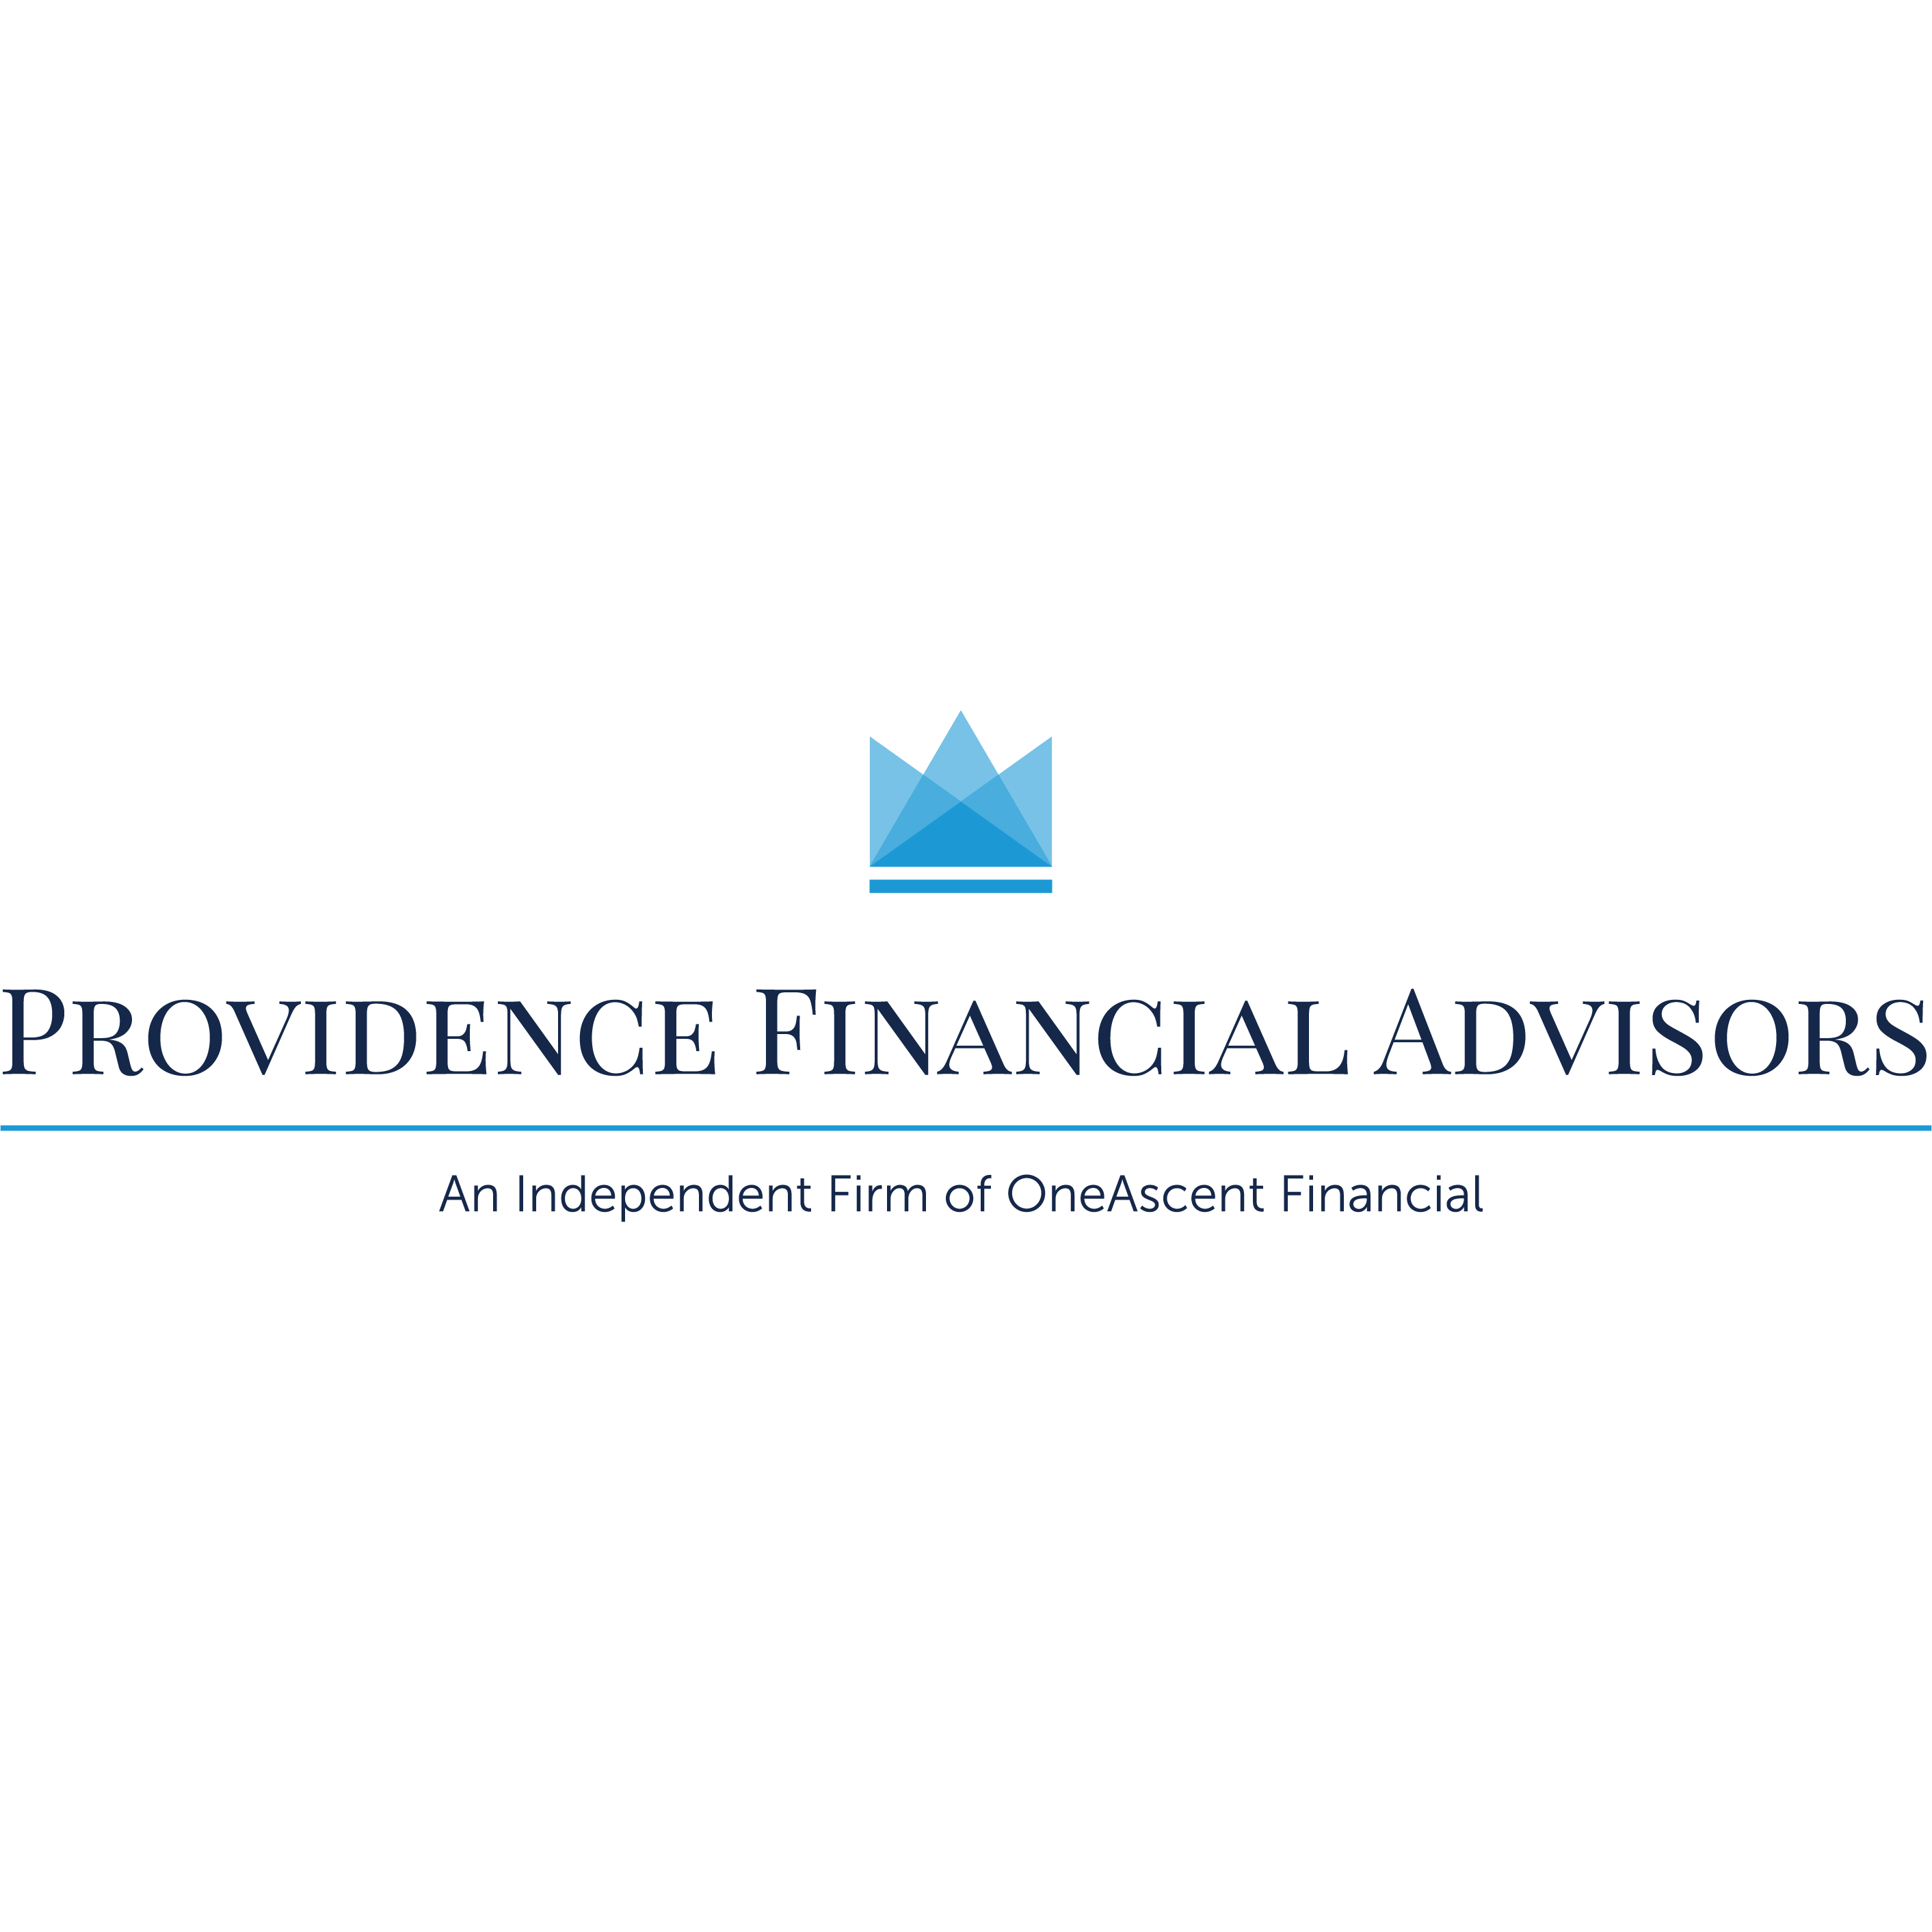 Providence Financial Advisors - Grand Rapids, MN 55744 - (218)326-0068 | ShowMeLocal.com